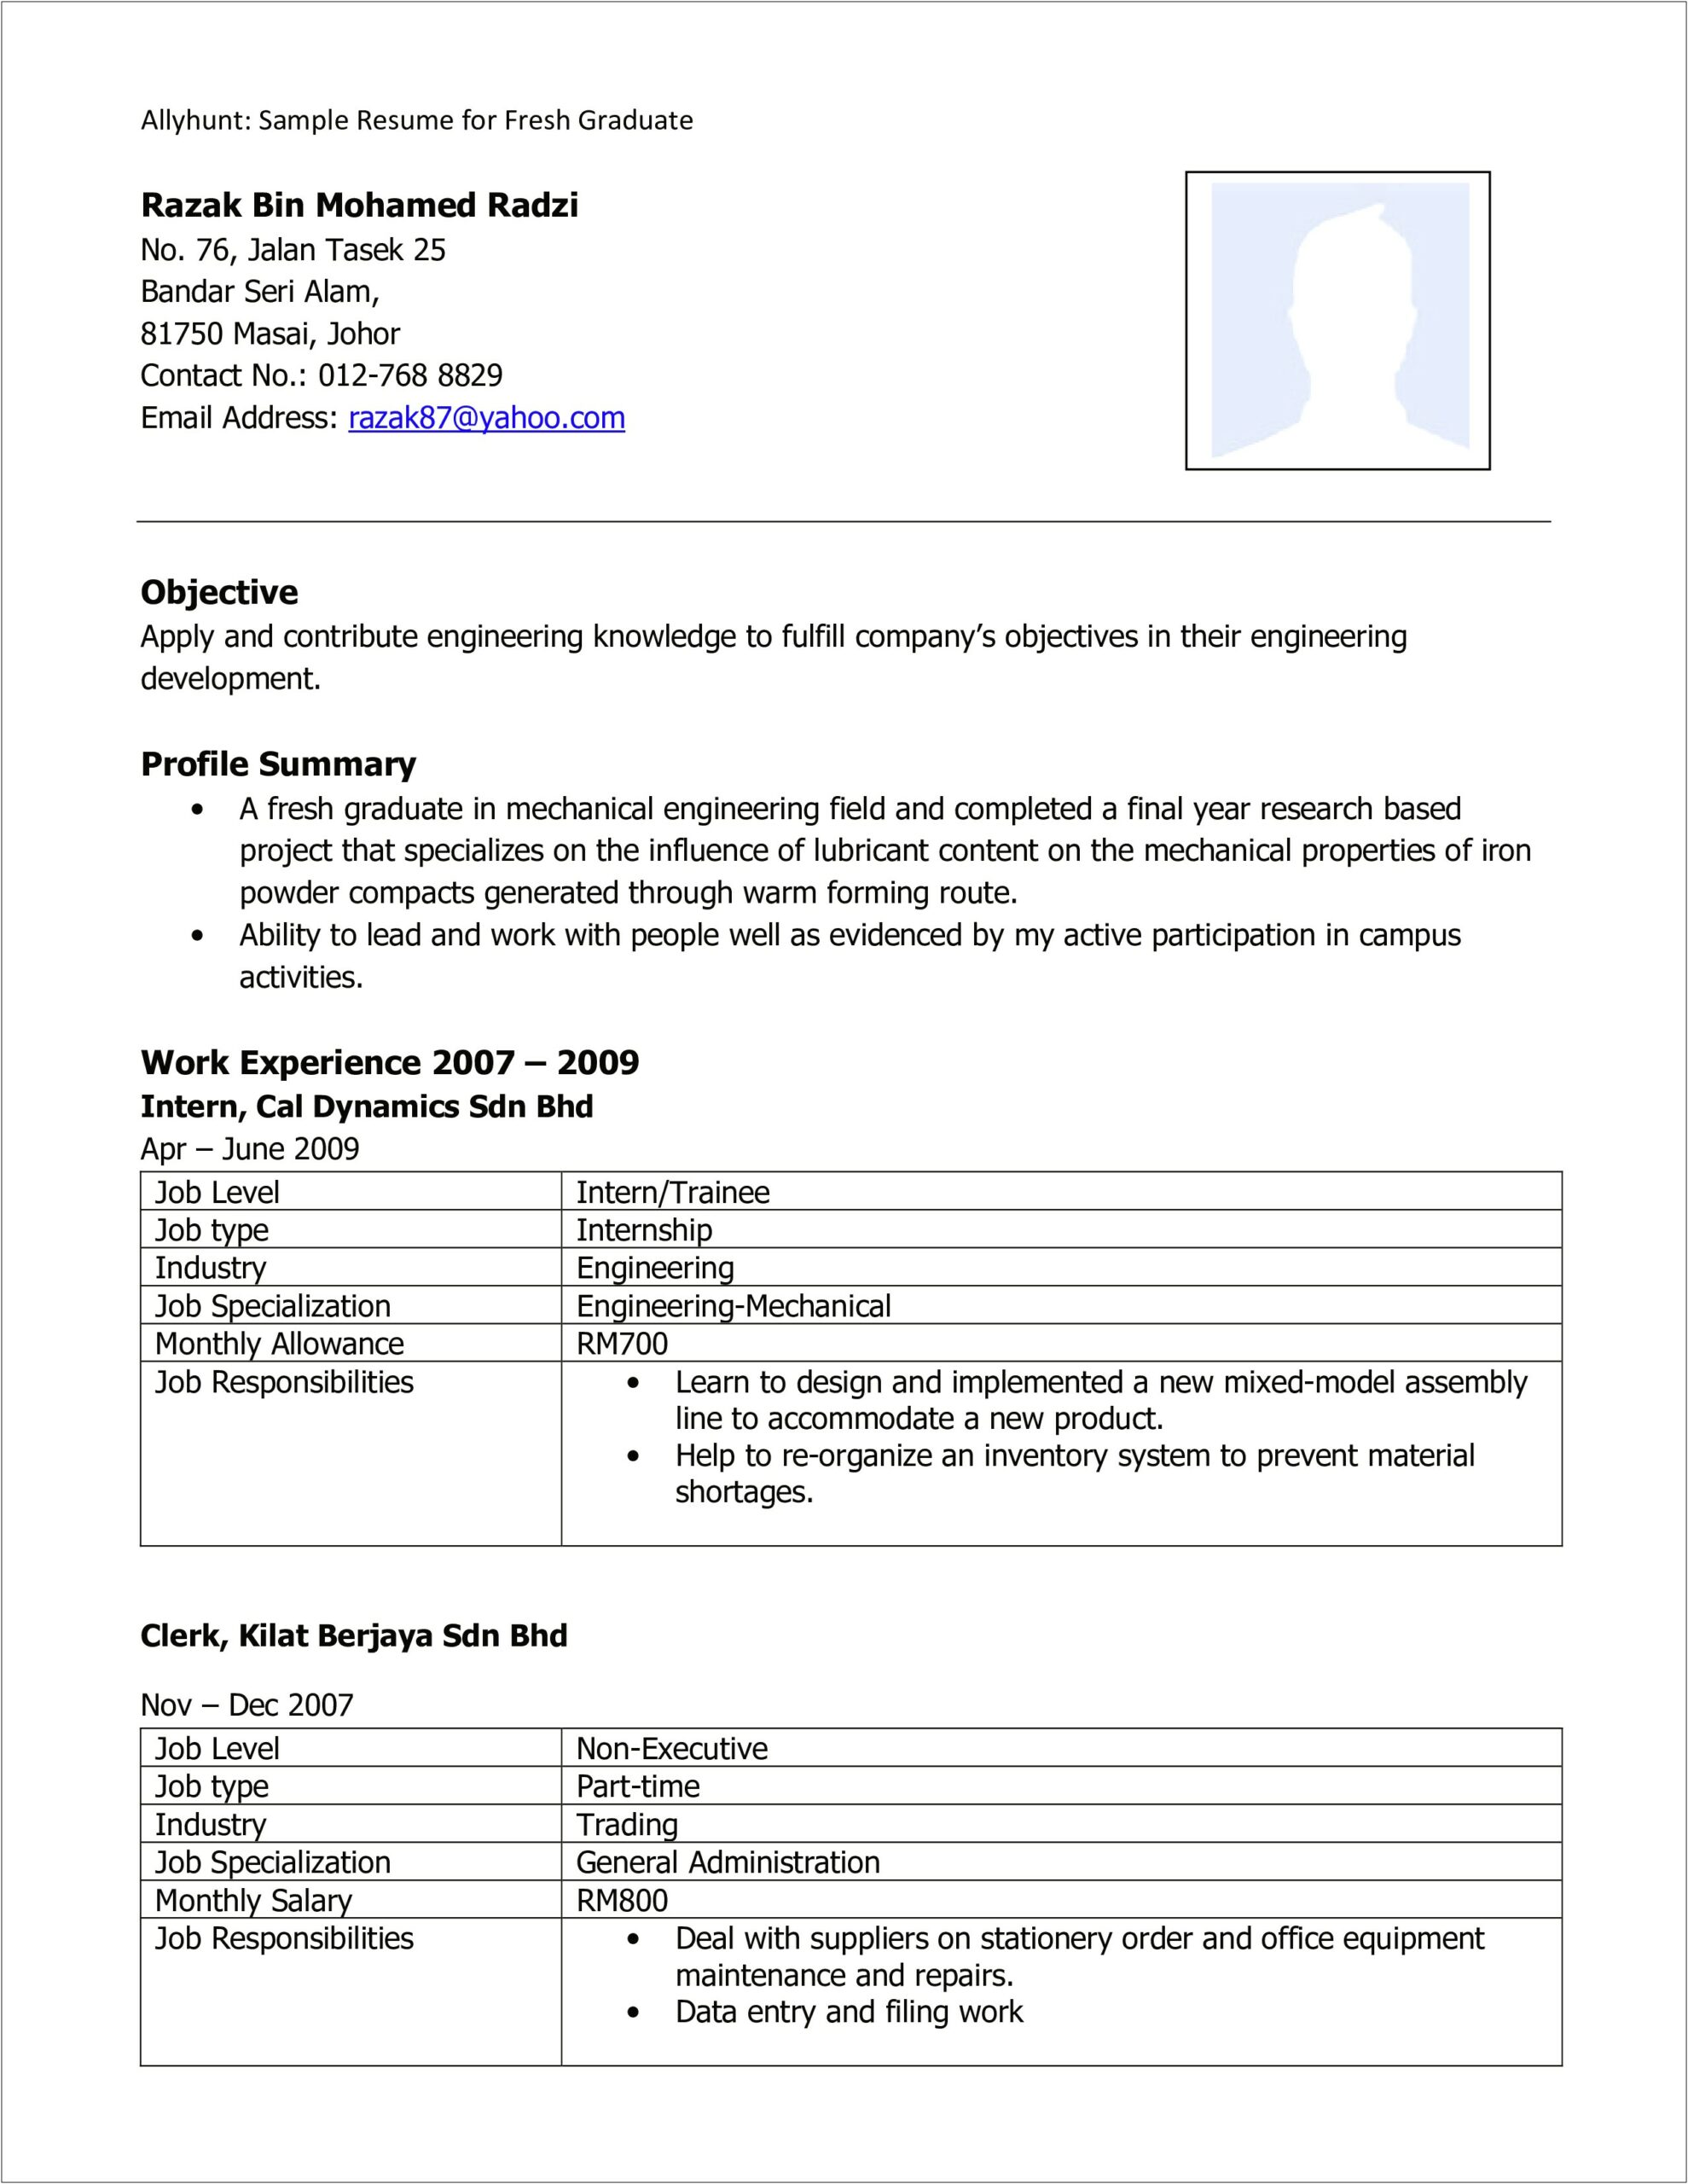 Resume Summary For Graduate Mechanical Engineer